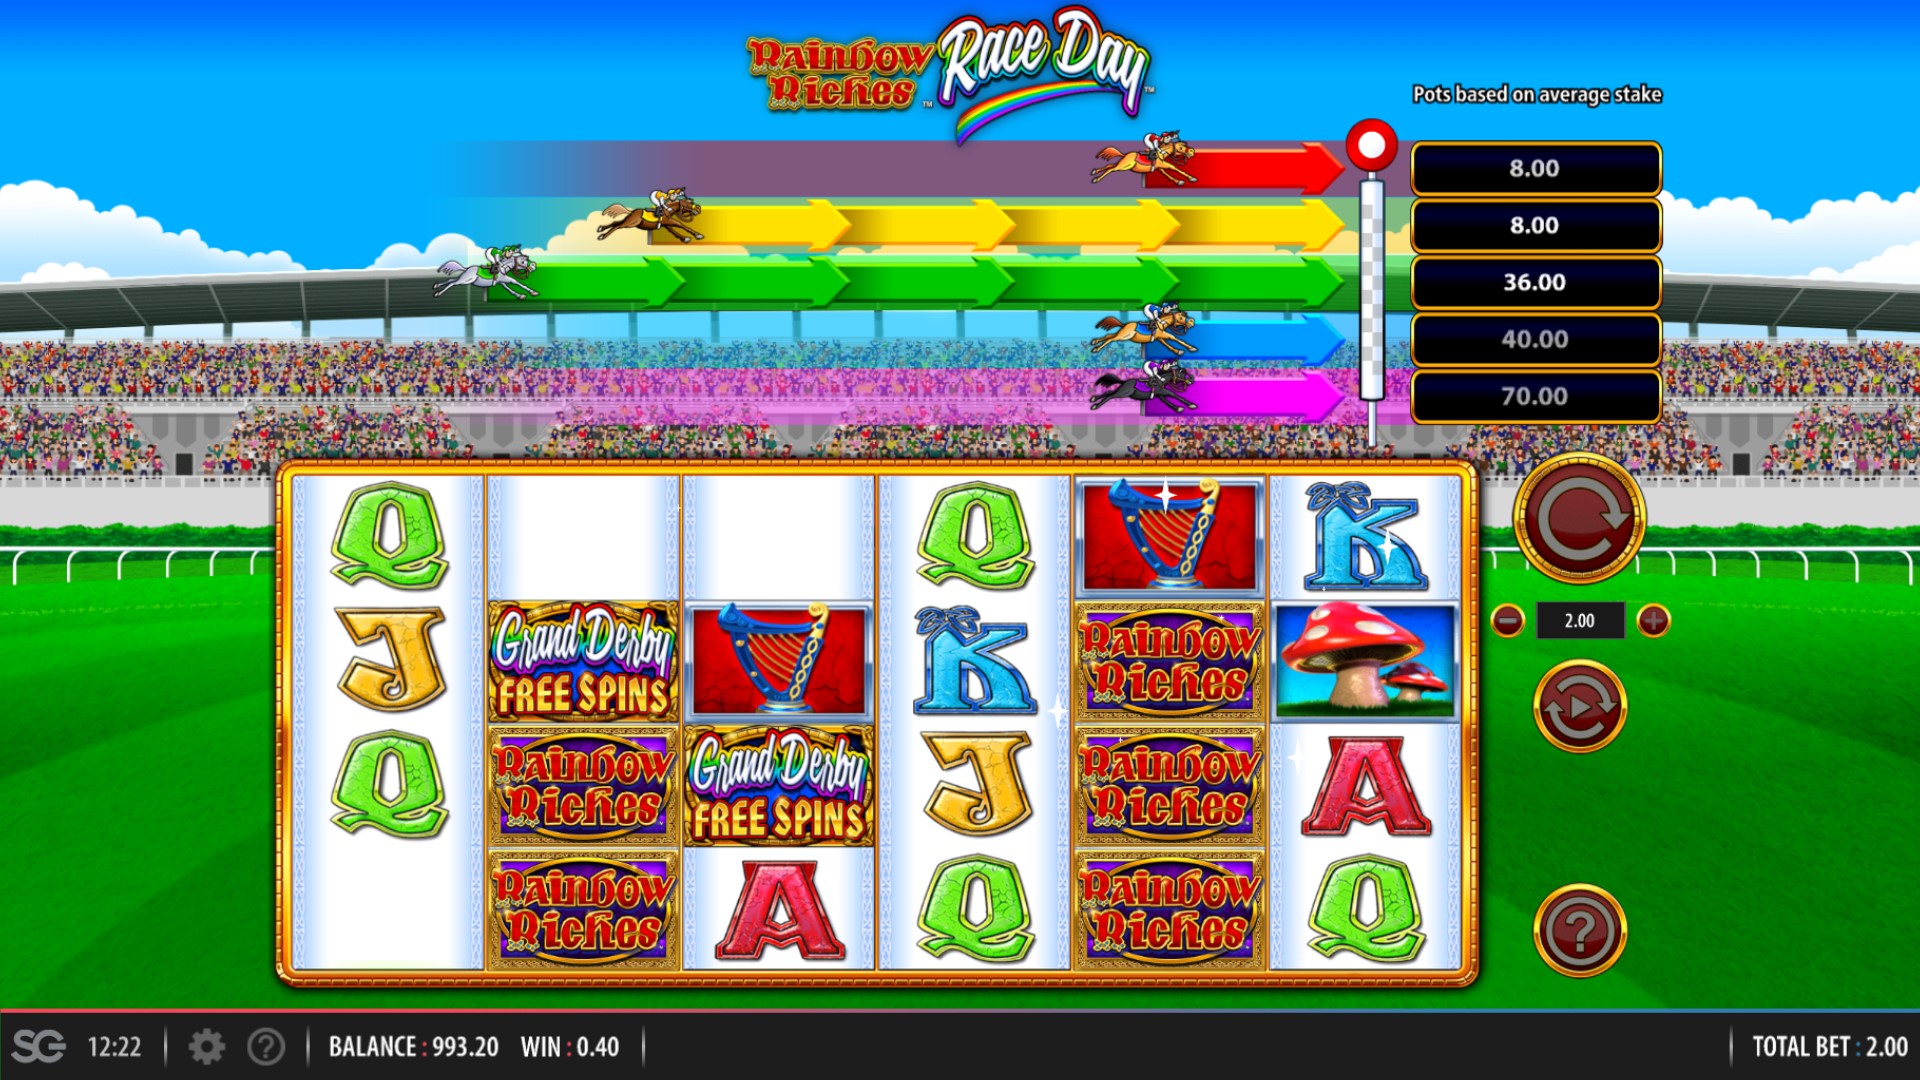 Rainbow Riches Race Day 4 SG Digital